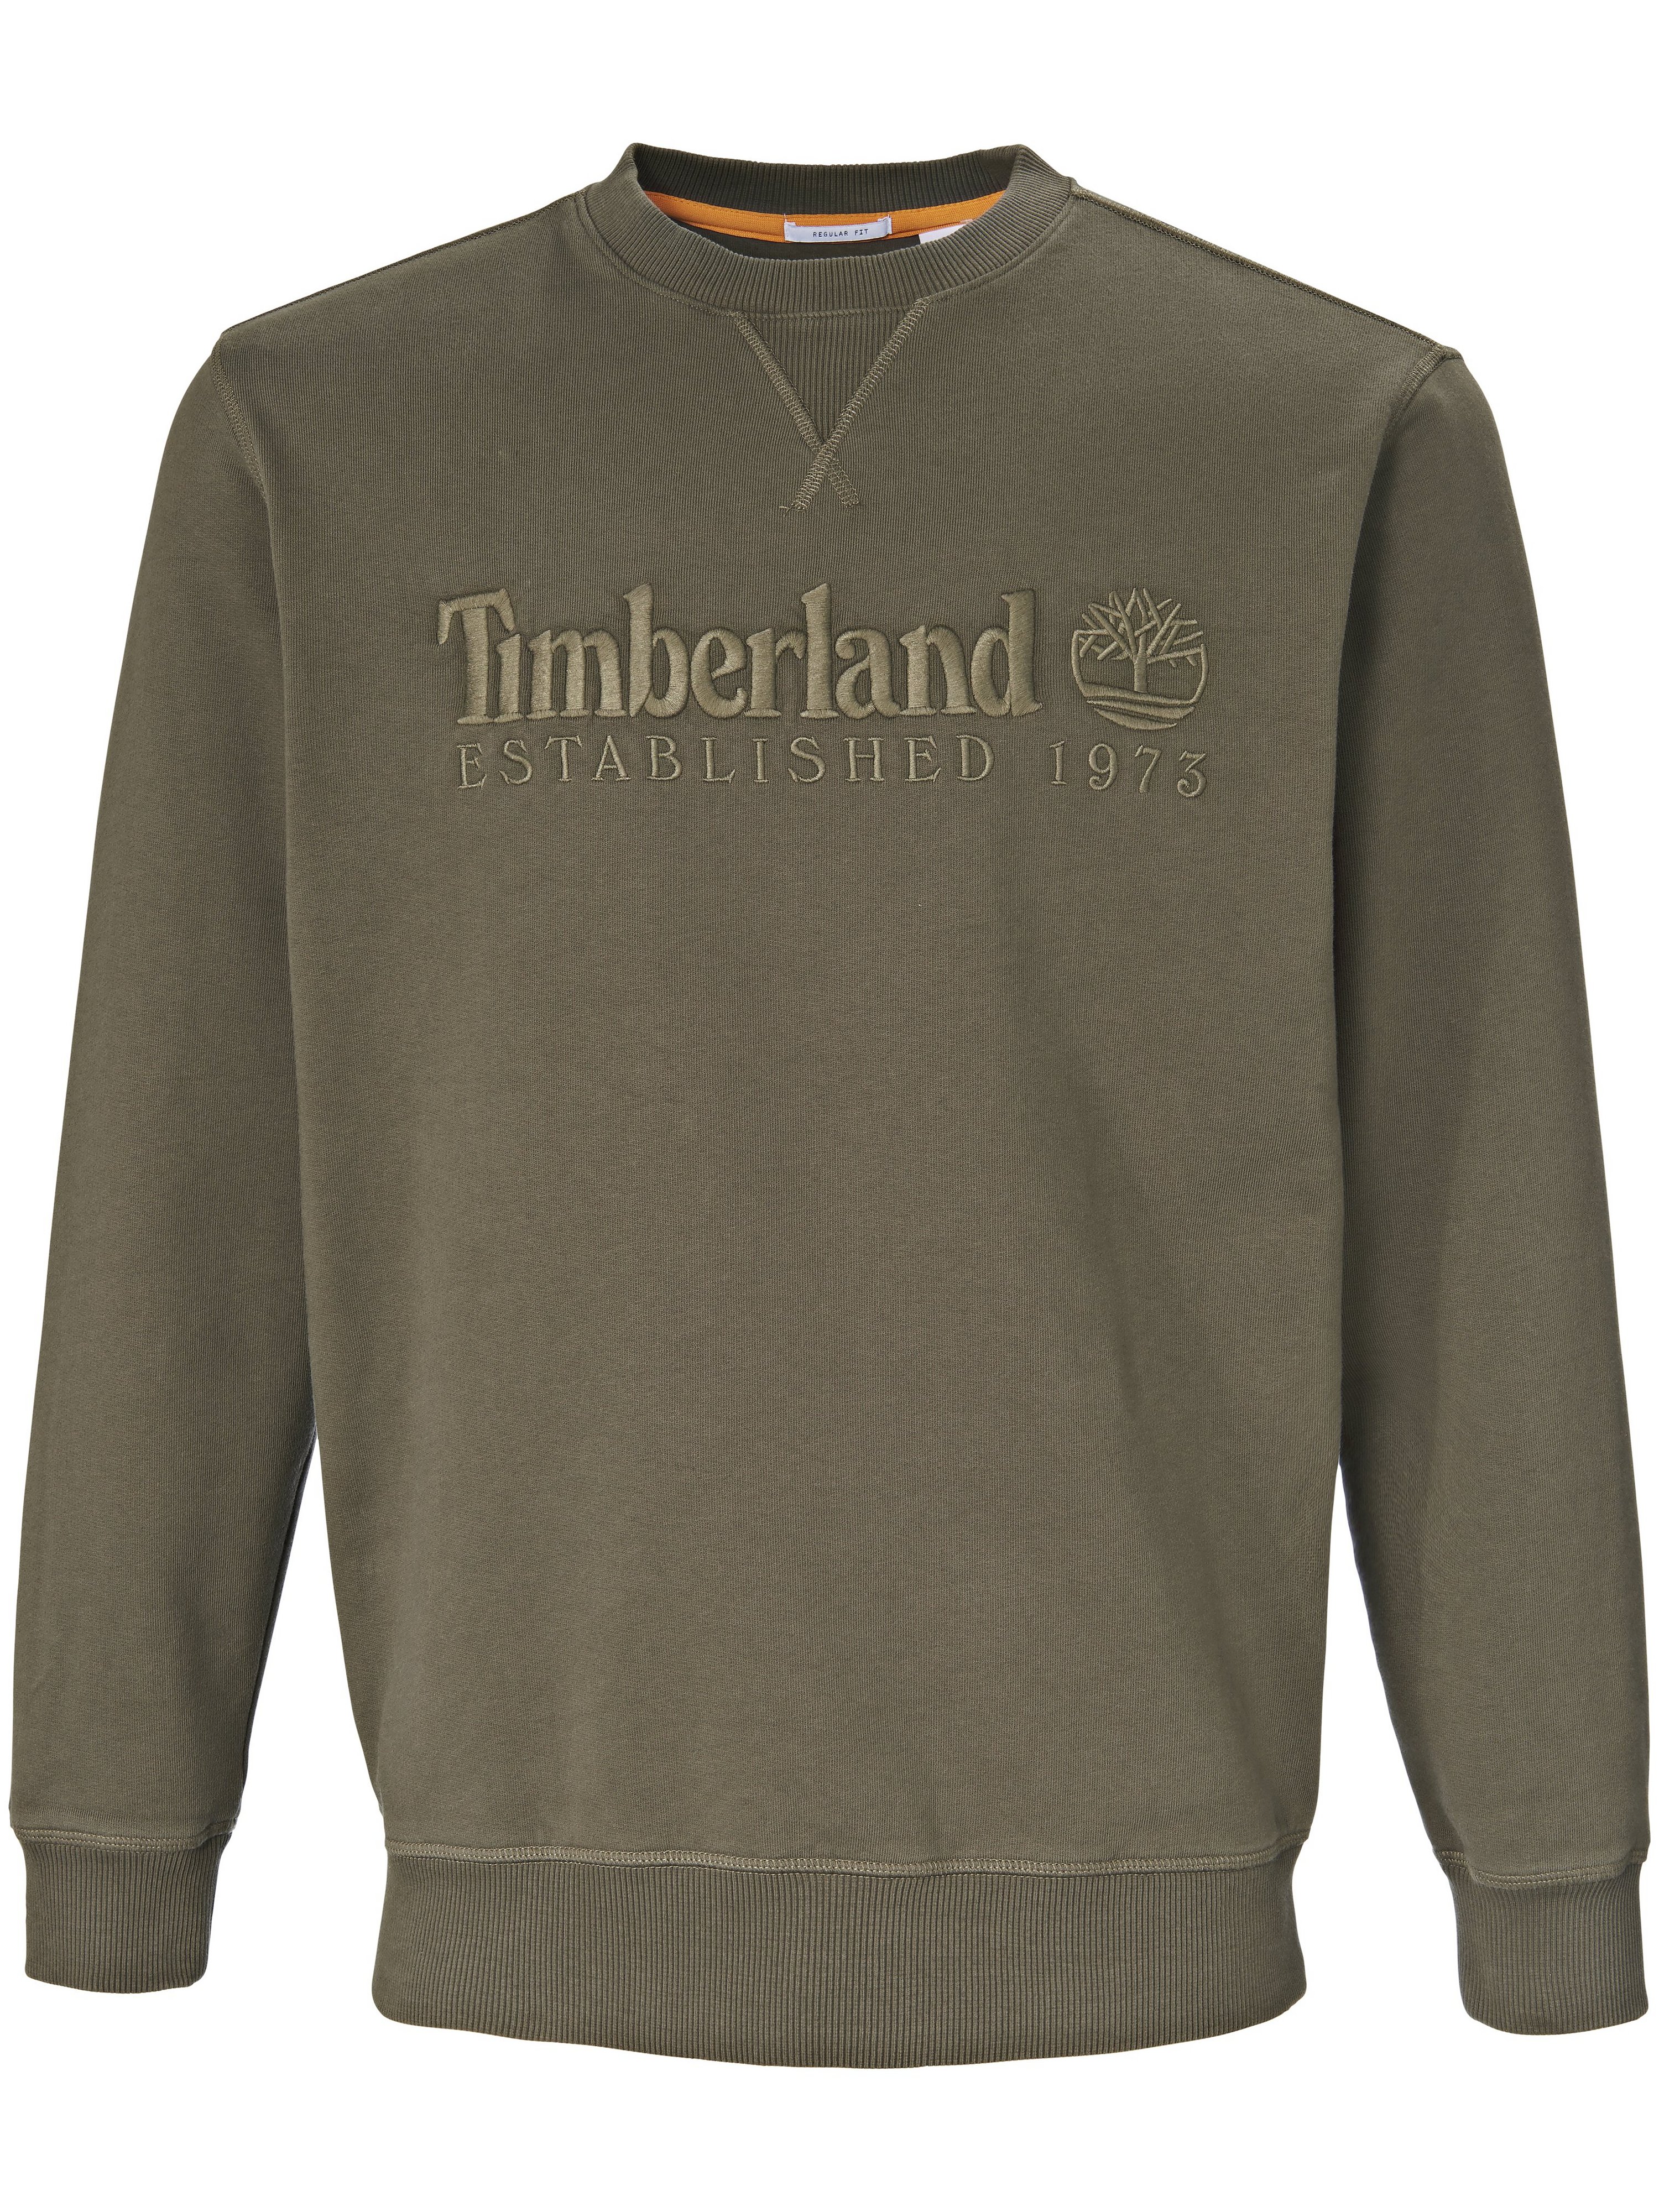 Sweatshirt Timberland grün Größe: 52